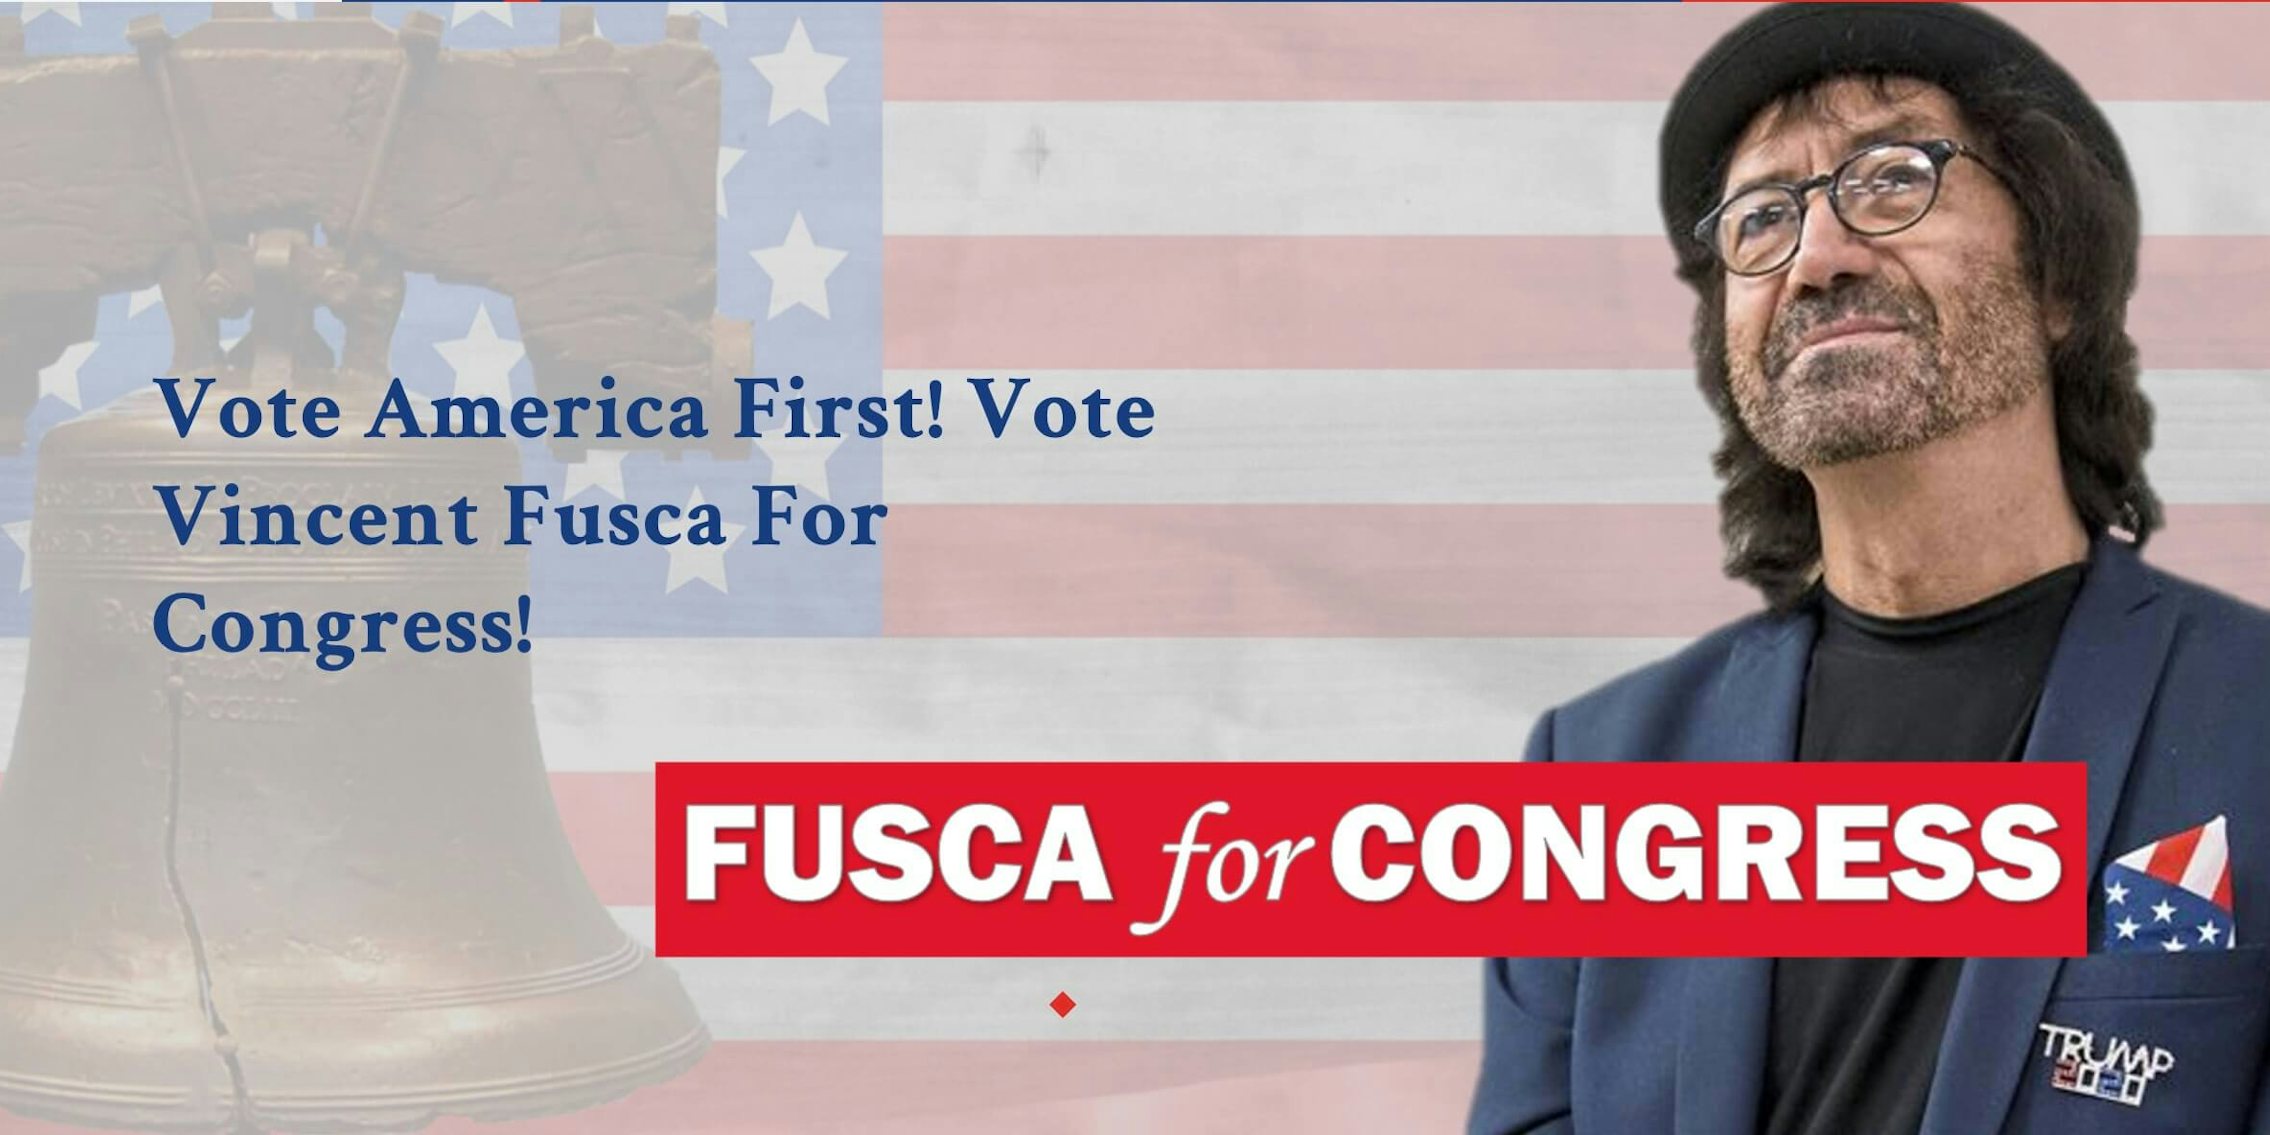 fusca for congress vincent fusca jfk jr